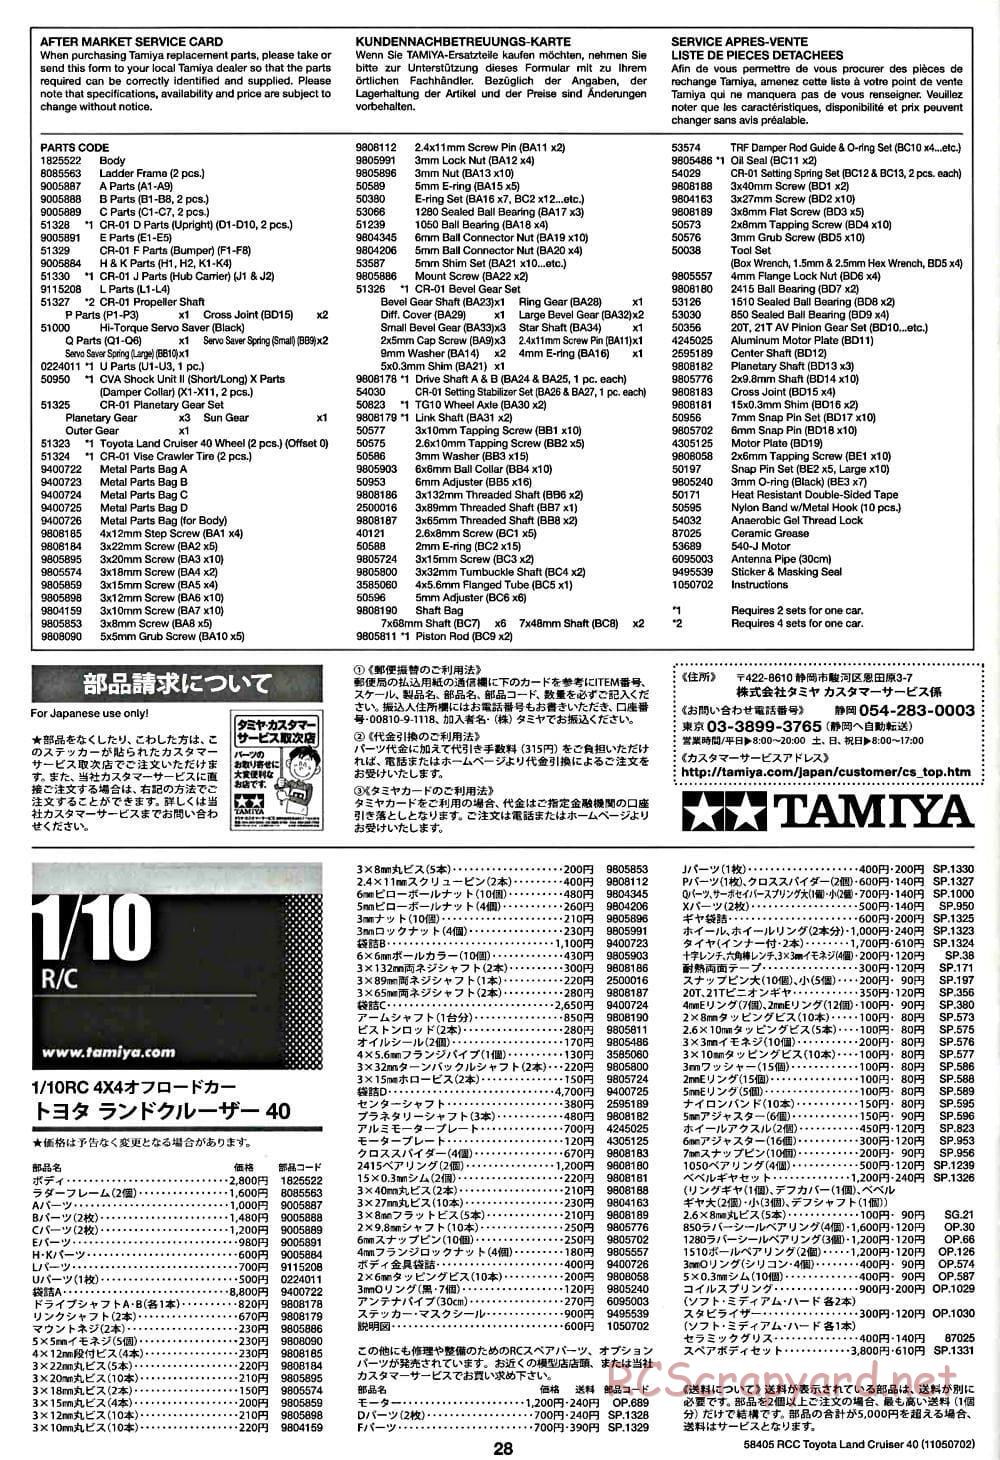 Tamiya - Toyota Land Cruiser 40 - CR-01 Chassis - Manual - Page 28